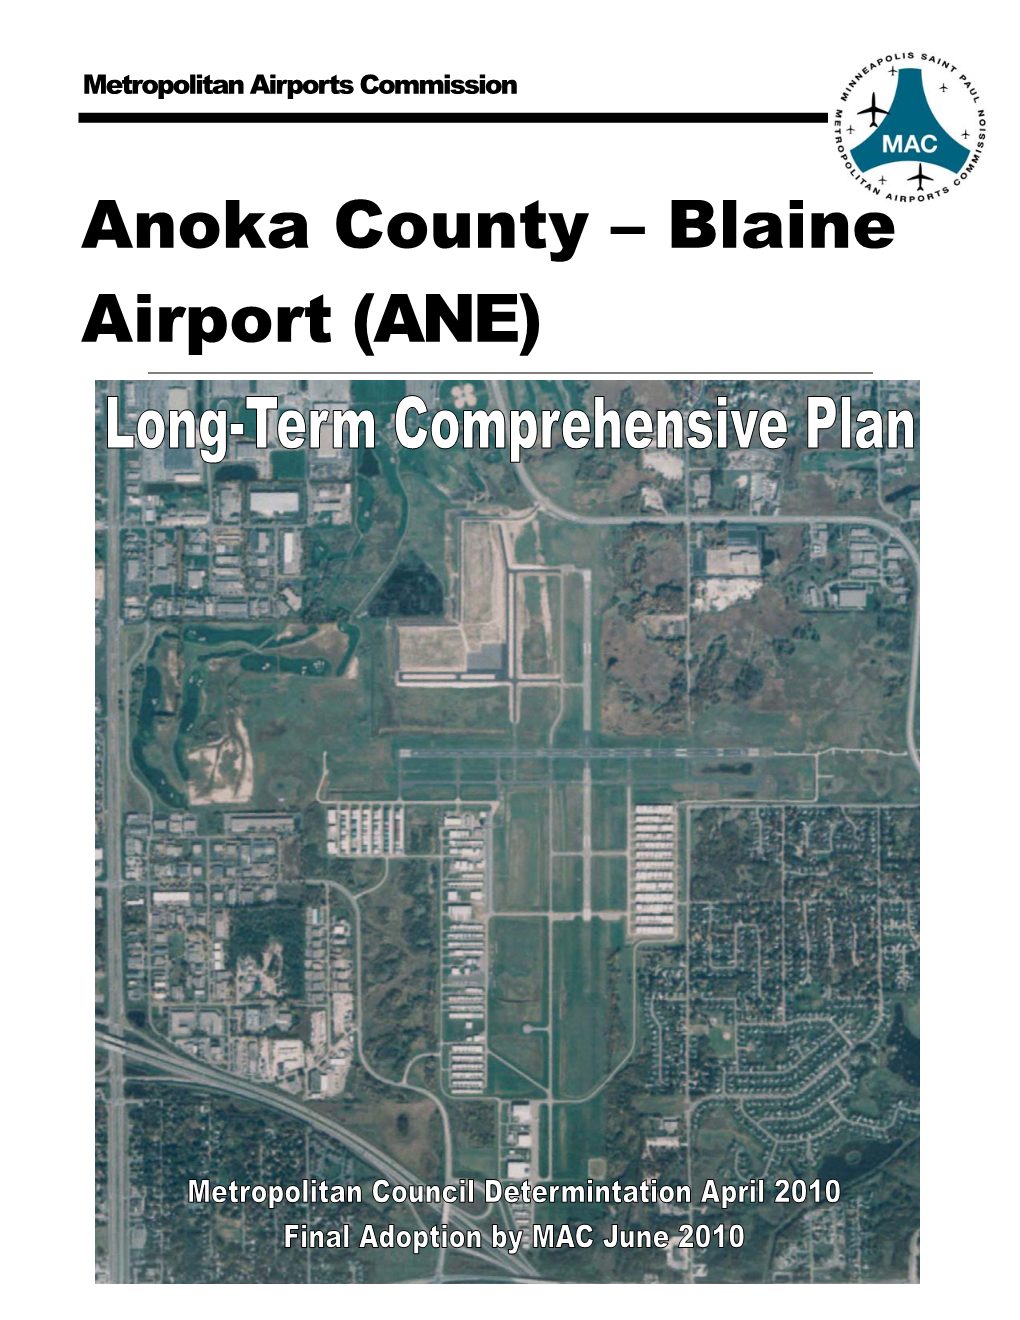 Anoka County-Blaine Airport